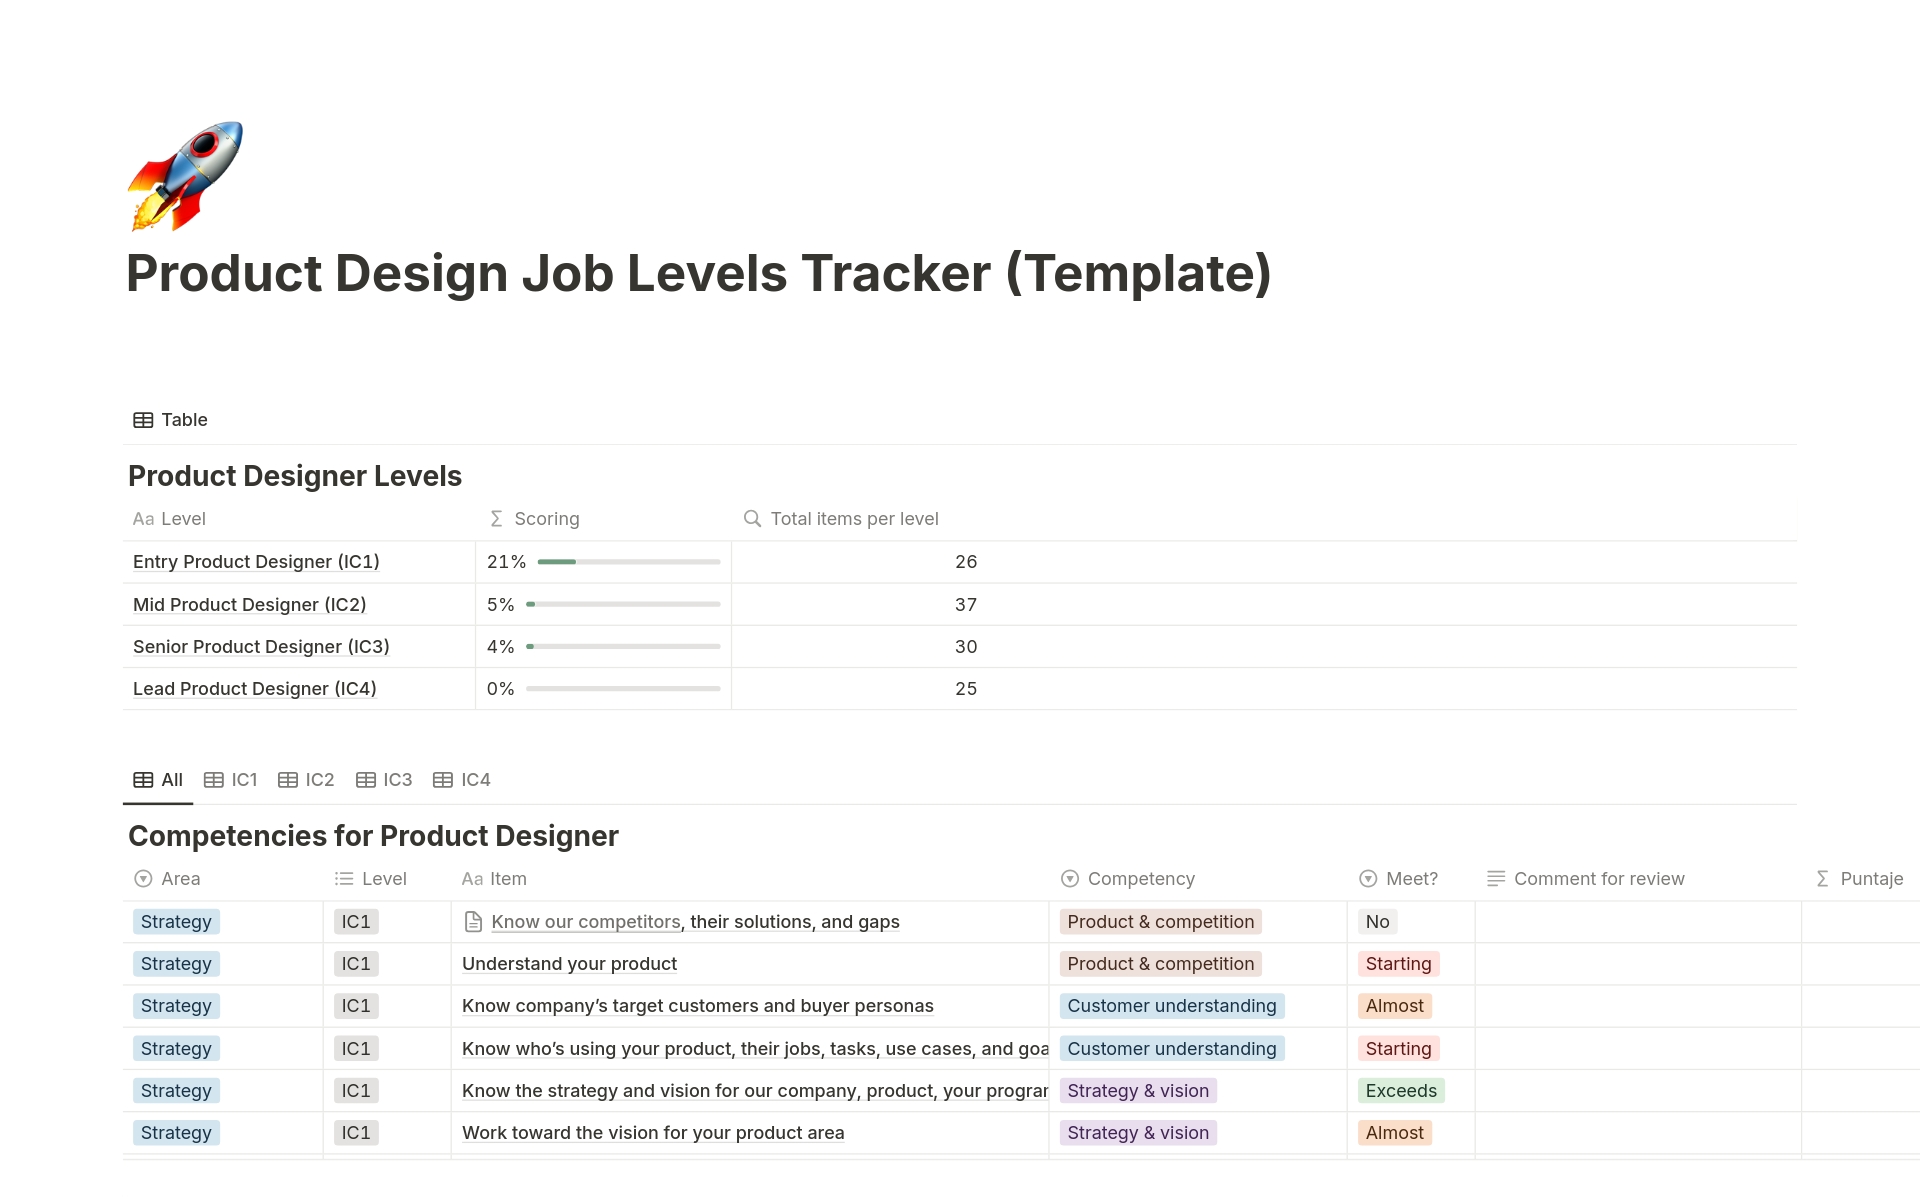 Product Design Job Levels Tracker님의 템플릿 미리보기